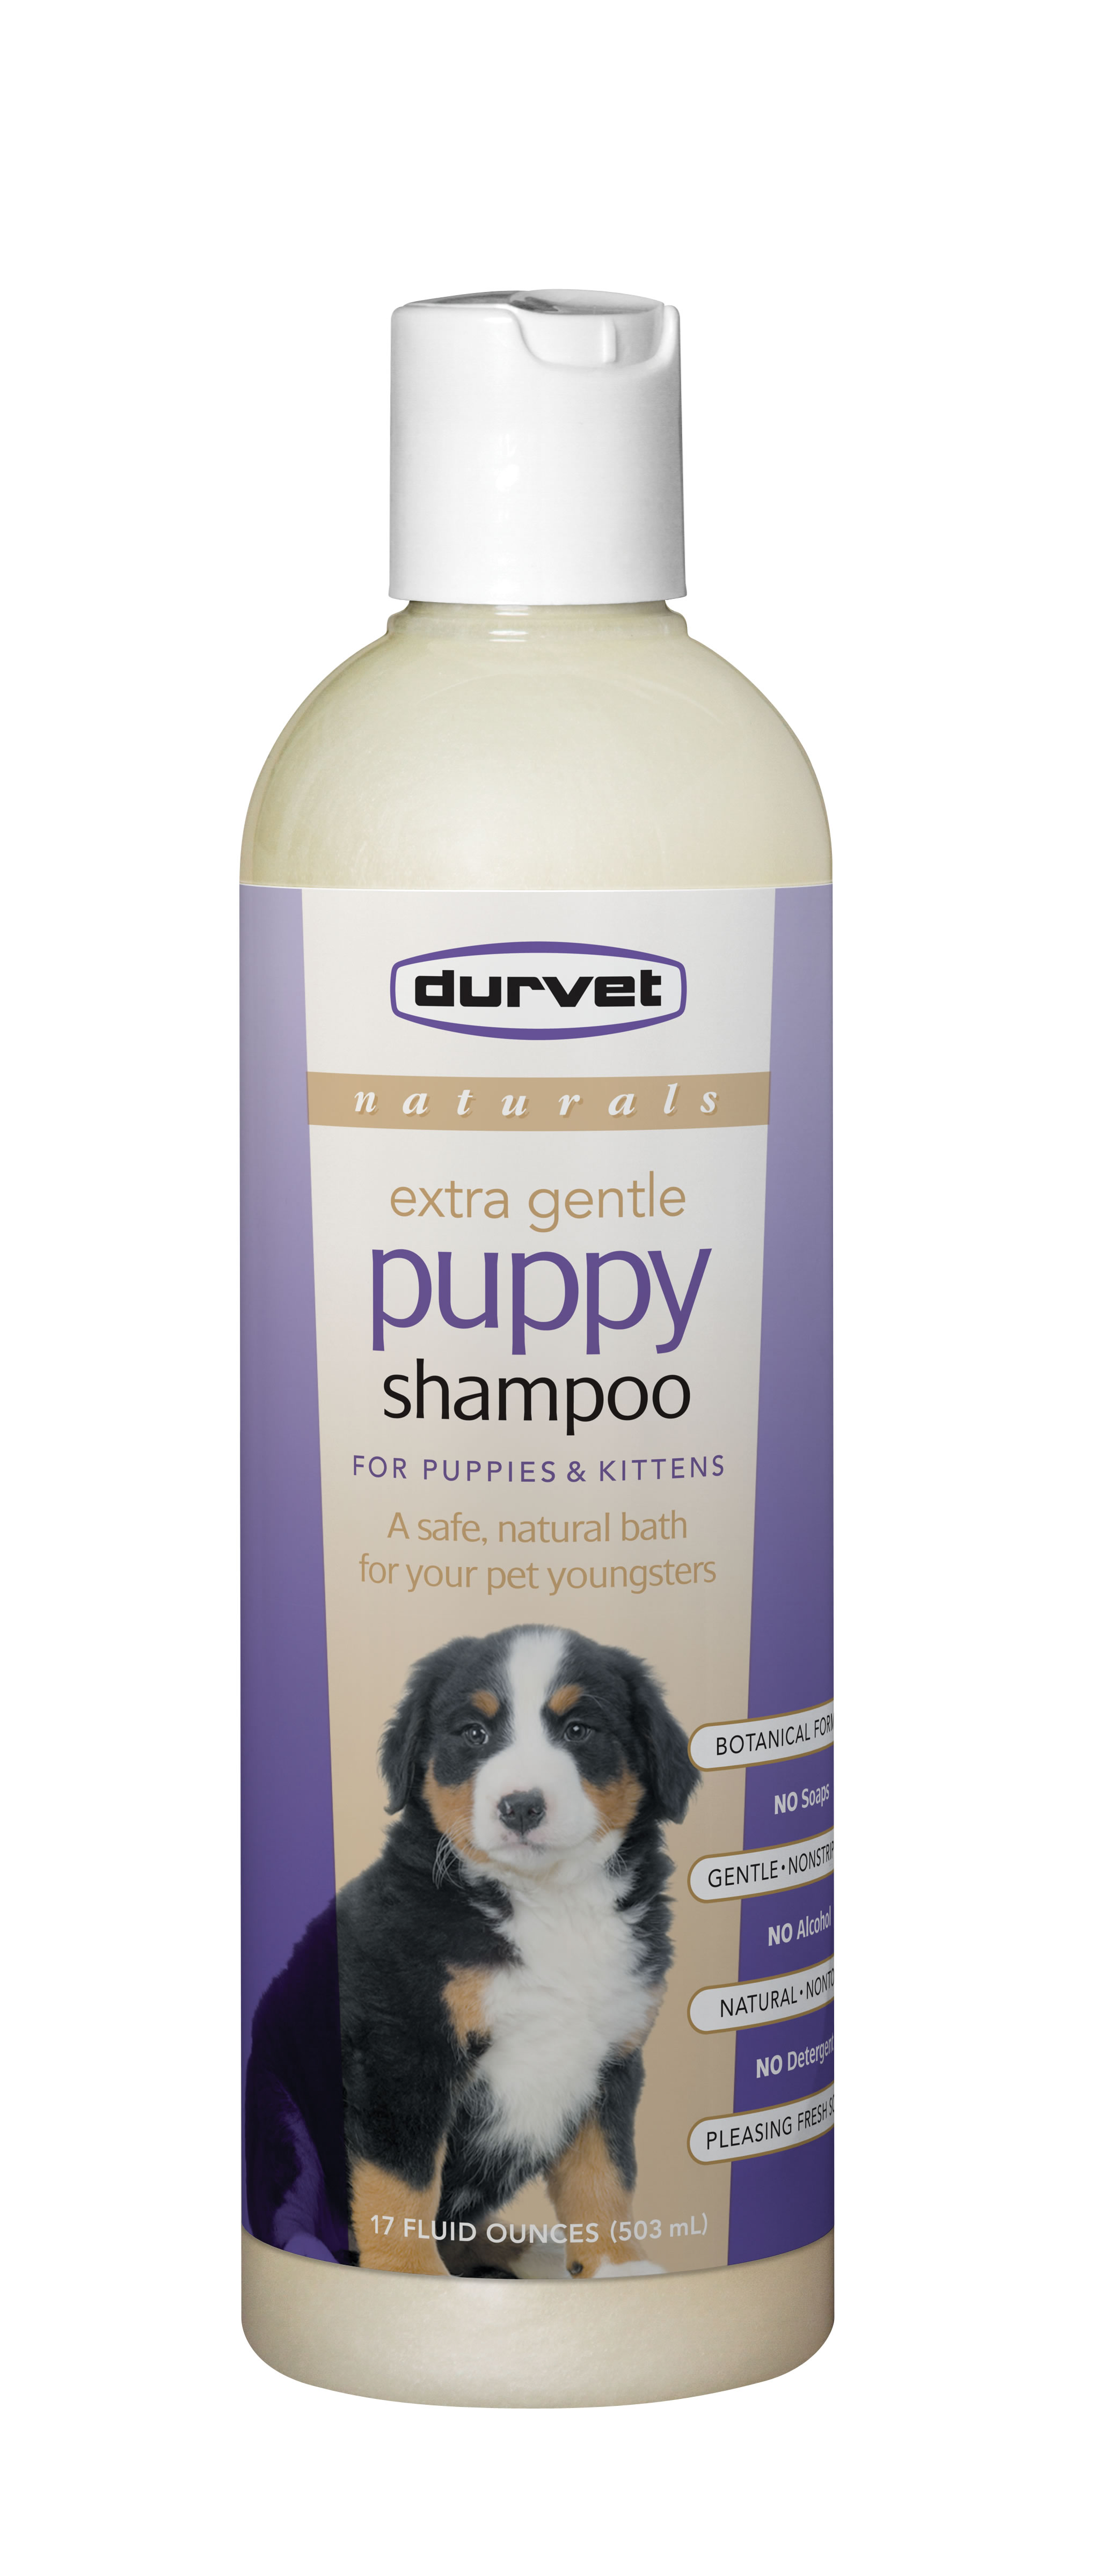 Durvet Naturals Puppy Shampoo